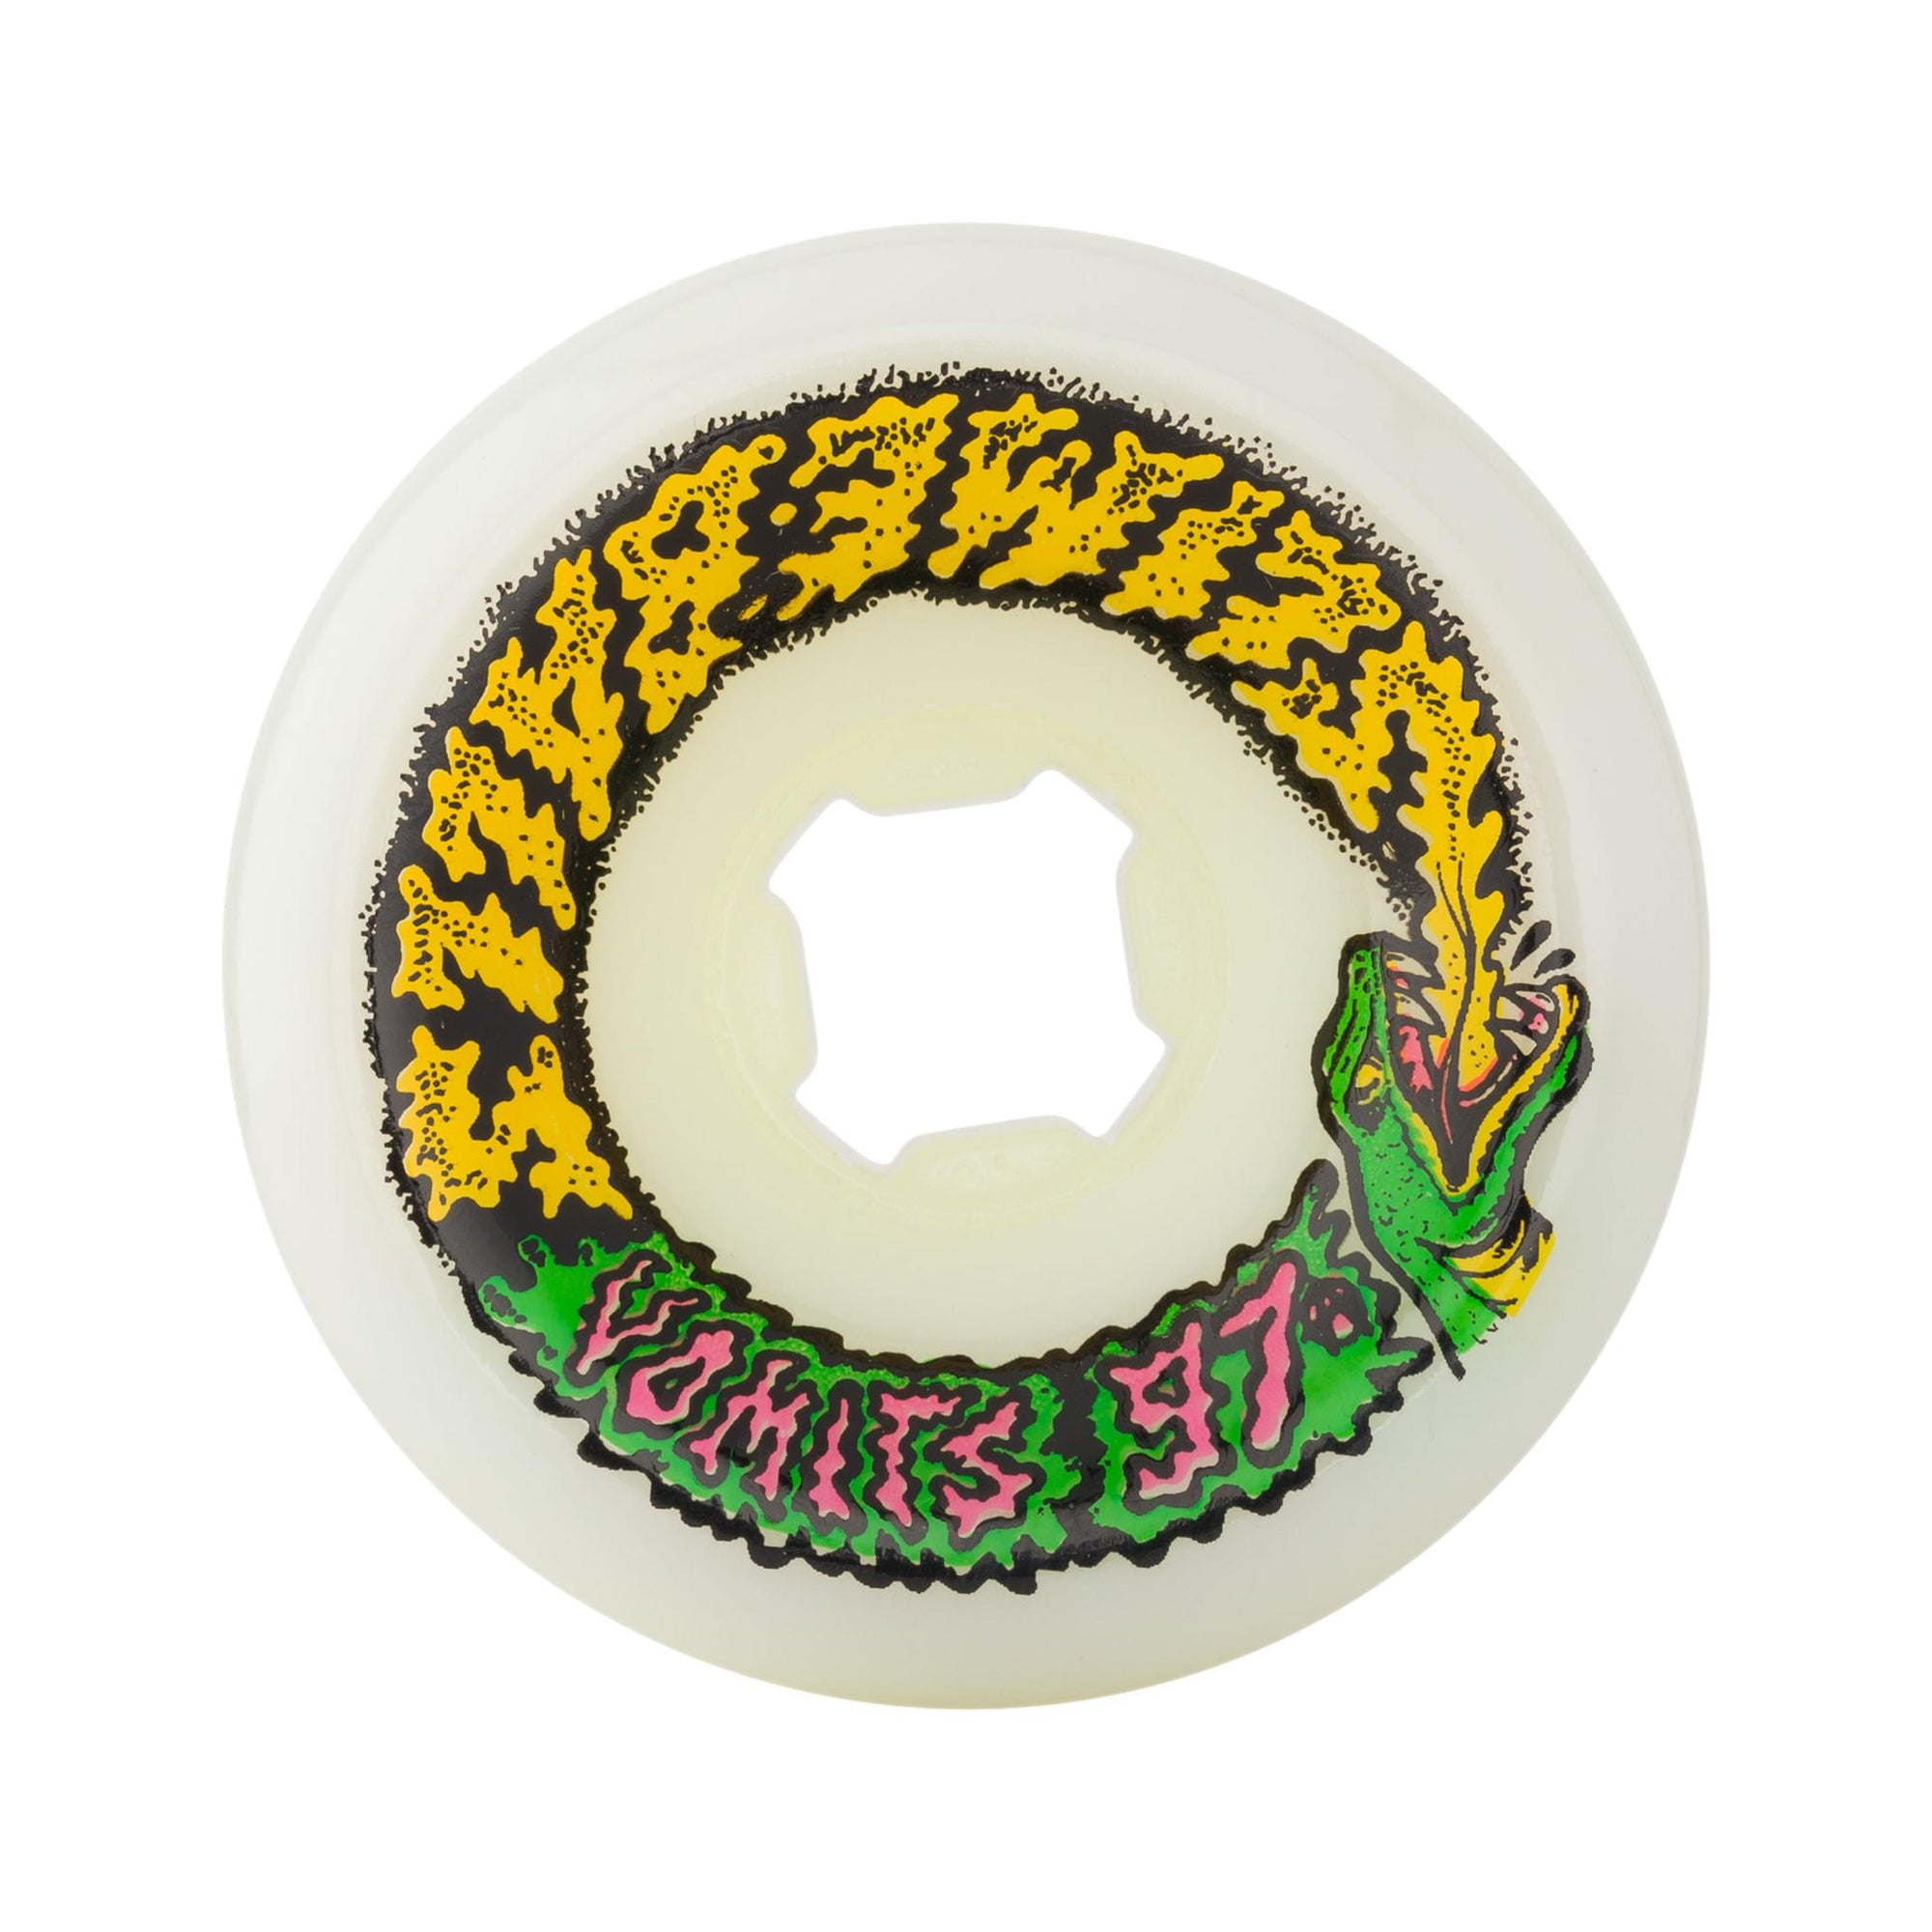 Slime Balls Snake Vomits 60mm 97a White Wheels - Venue Skateboards